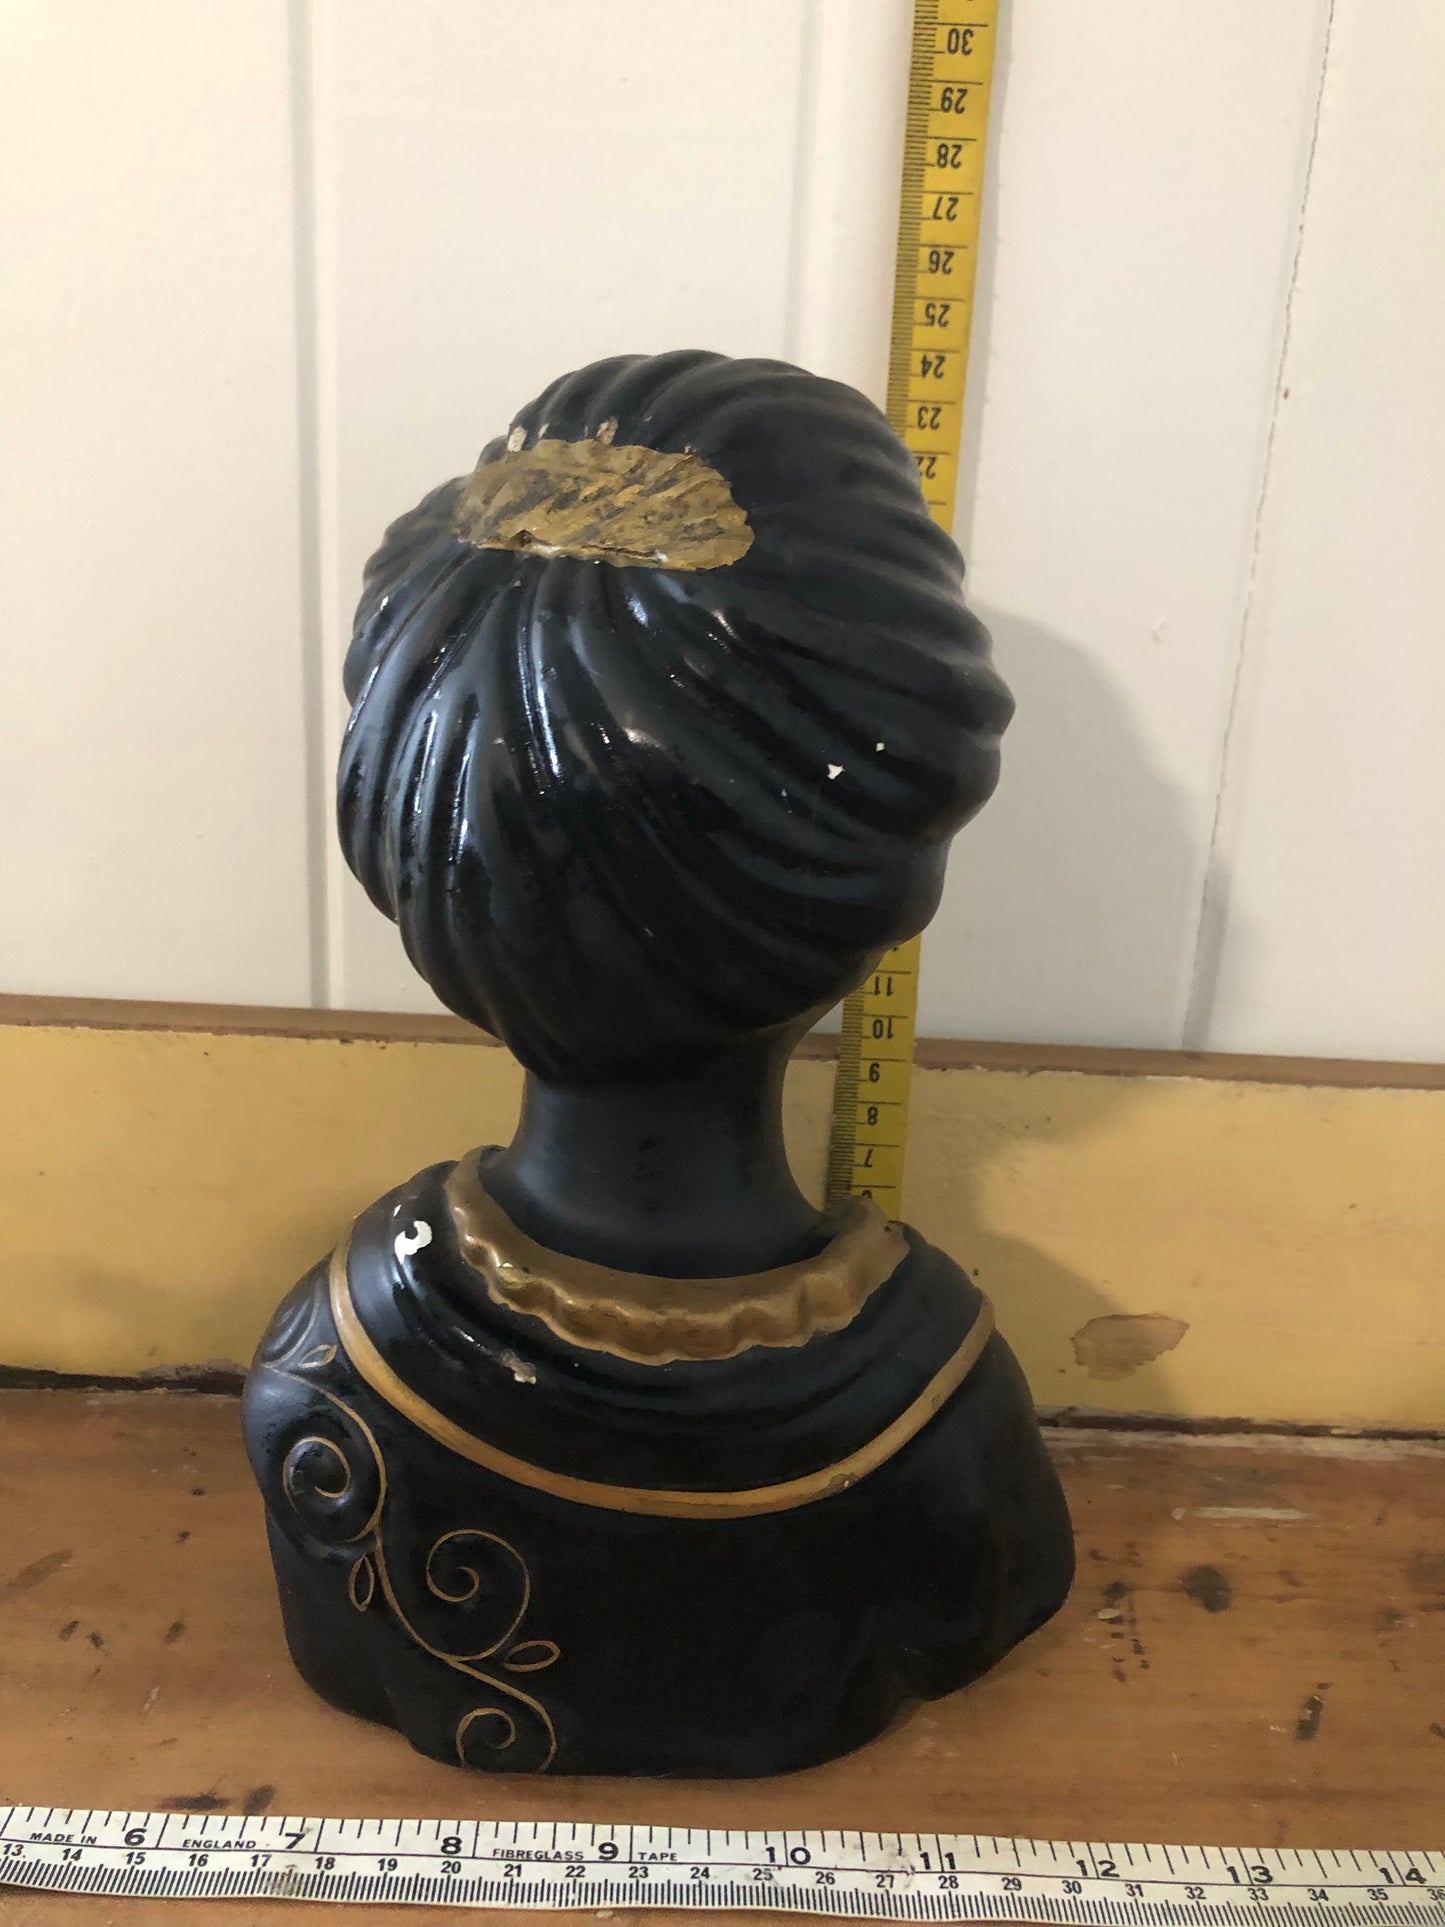 Italian made Asian head figurine. Black